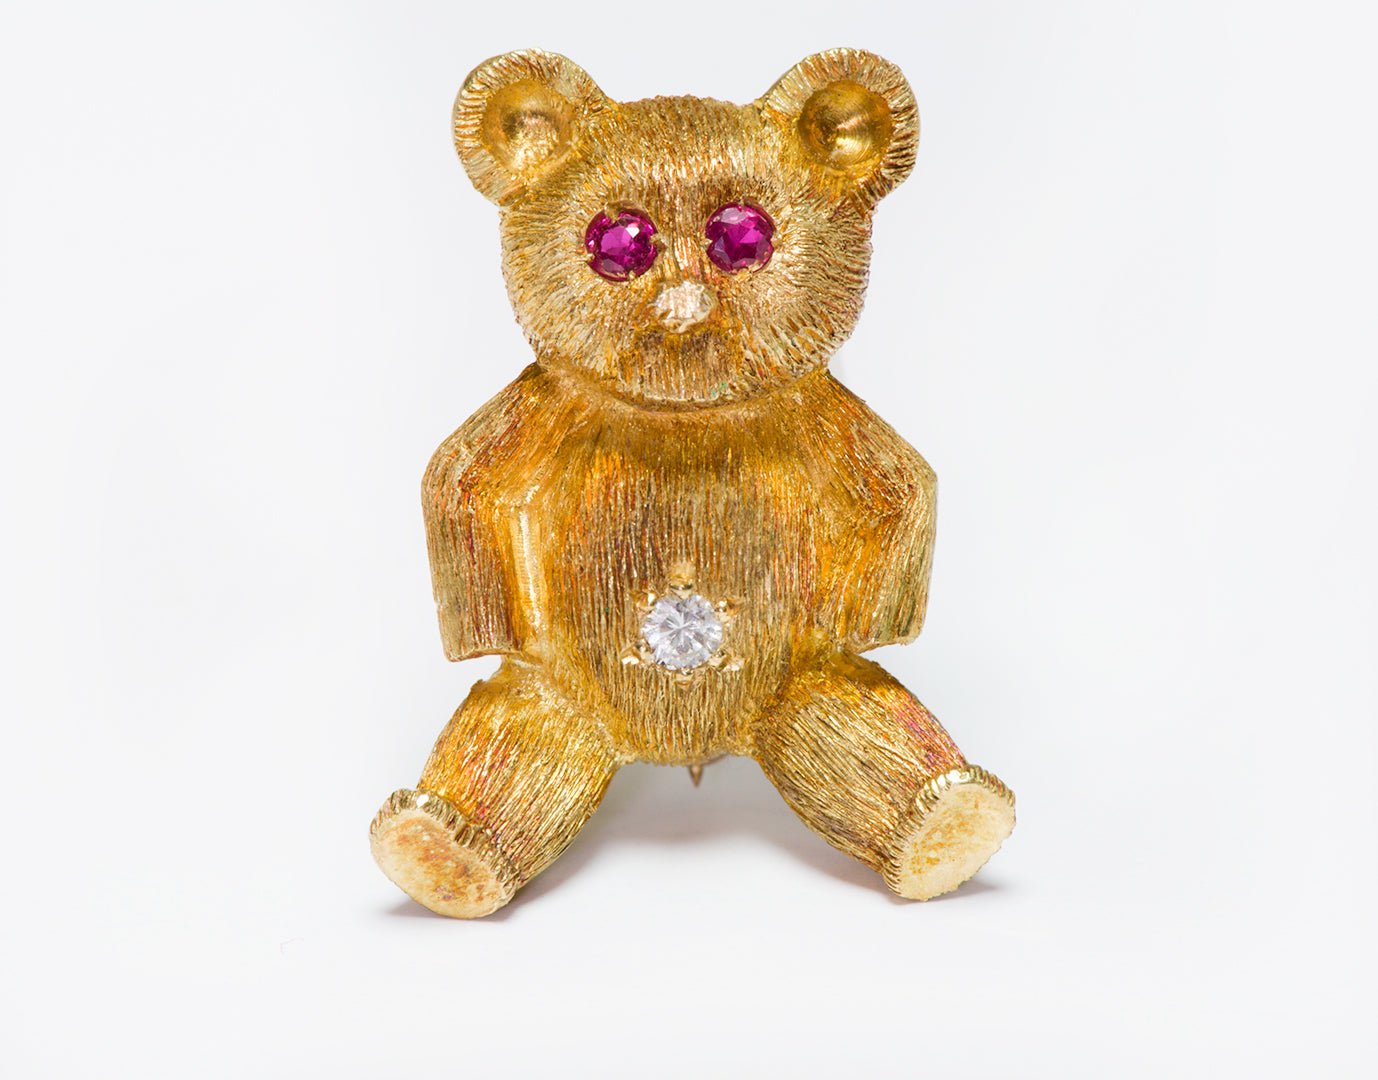 Vintage 18K Gold Ruby Diamond Teddy Bear Brooch